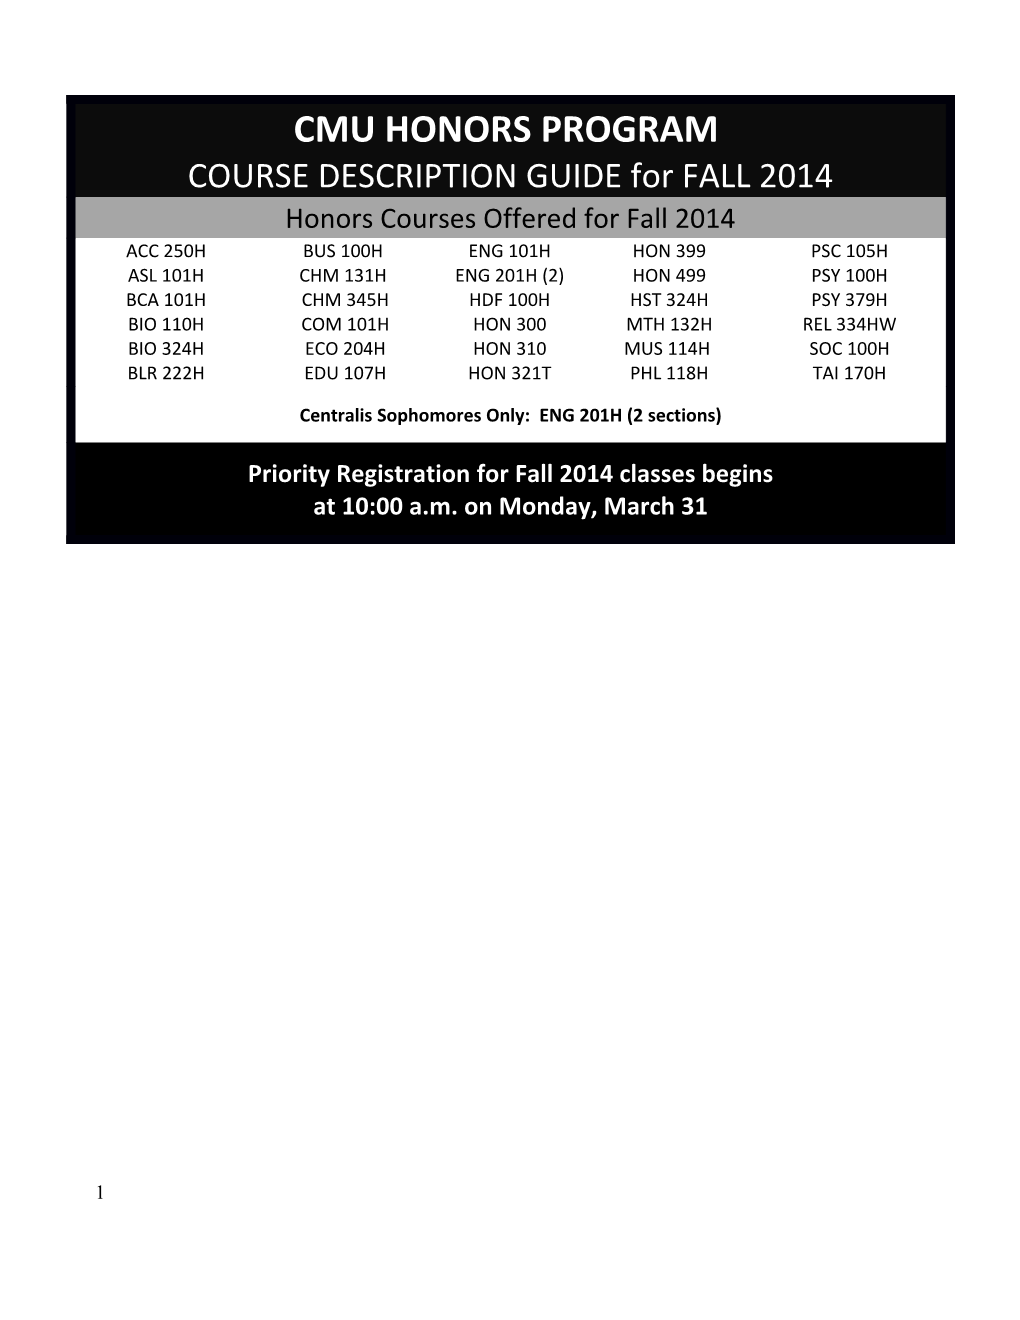 Fall 2014 Honors Course Description Guide